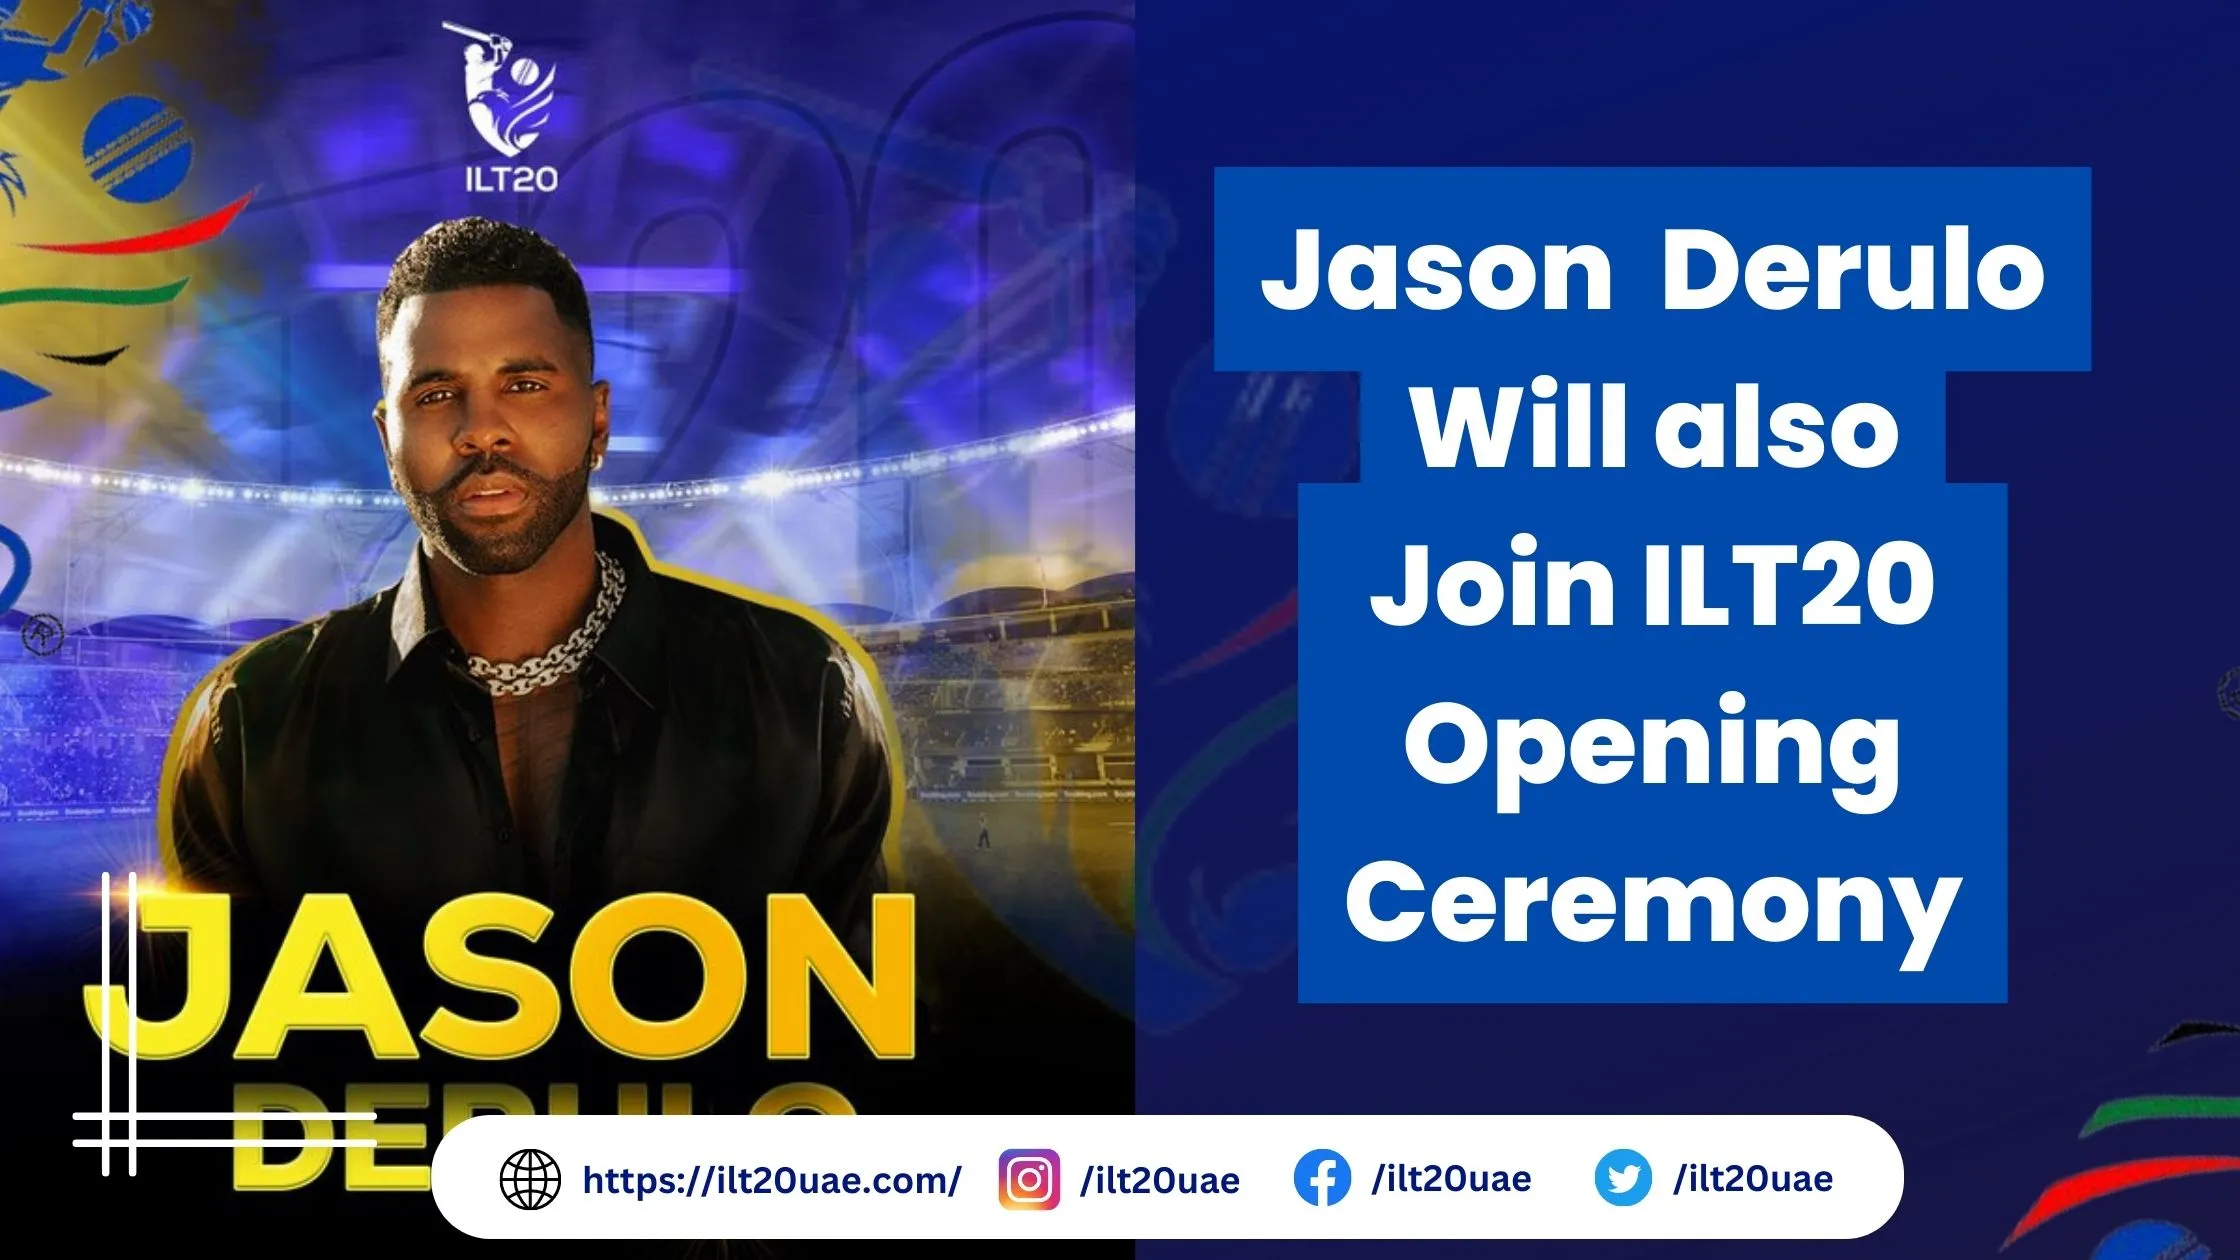 Jason-Derulo-RnB-Megastar-will-also-Join-ILT20-Opening-Ceremony